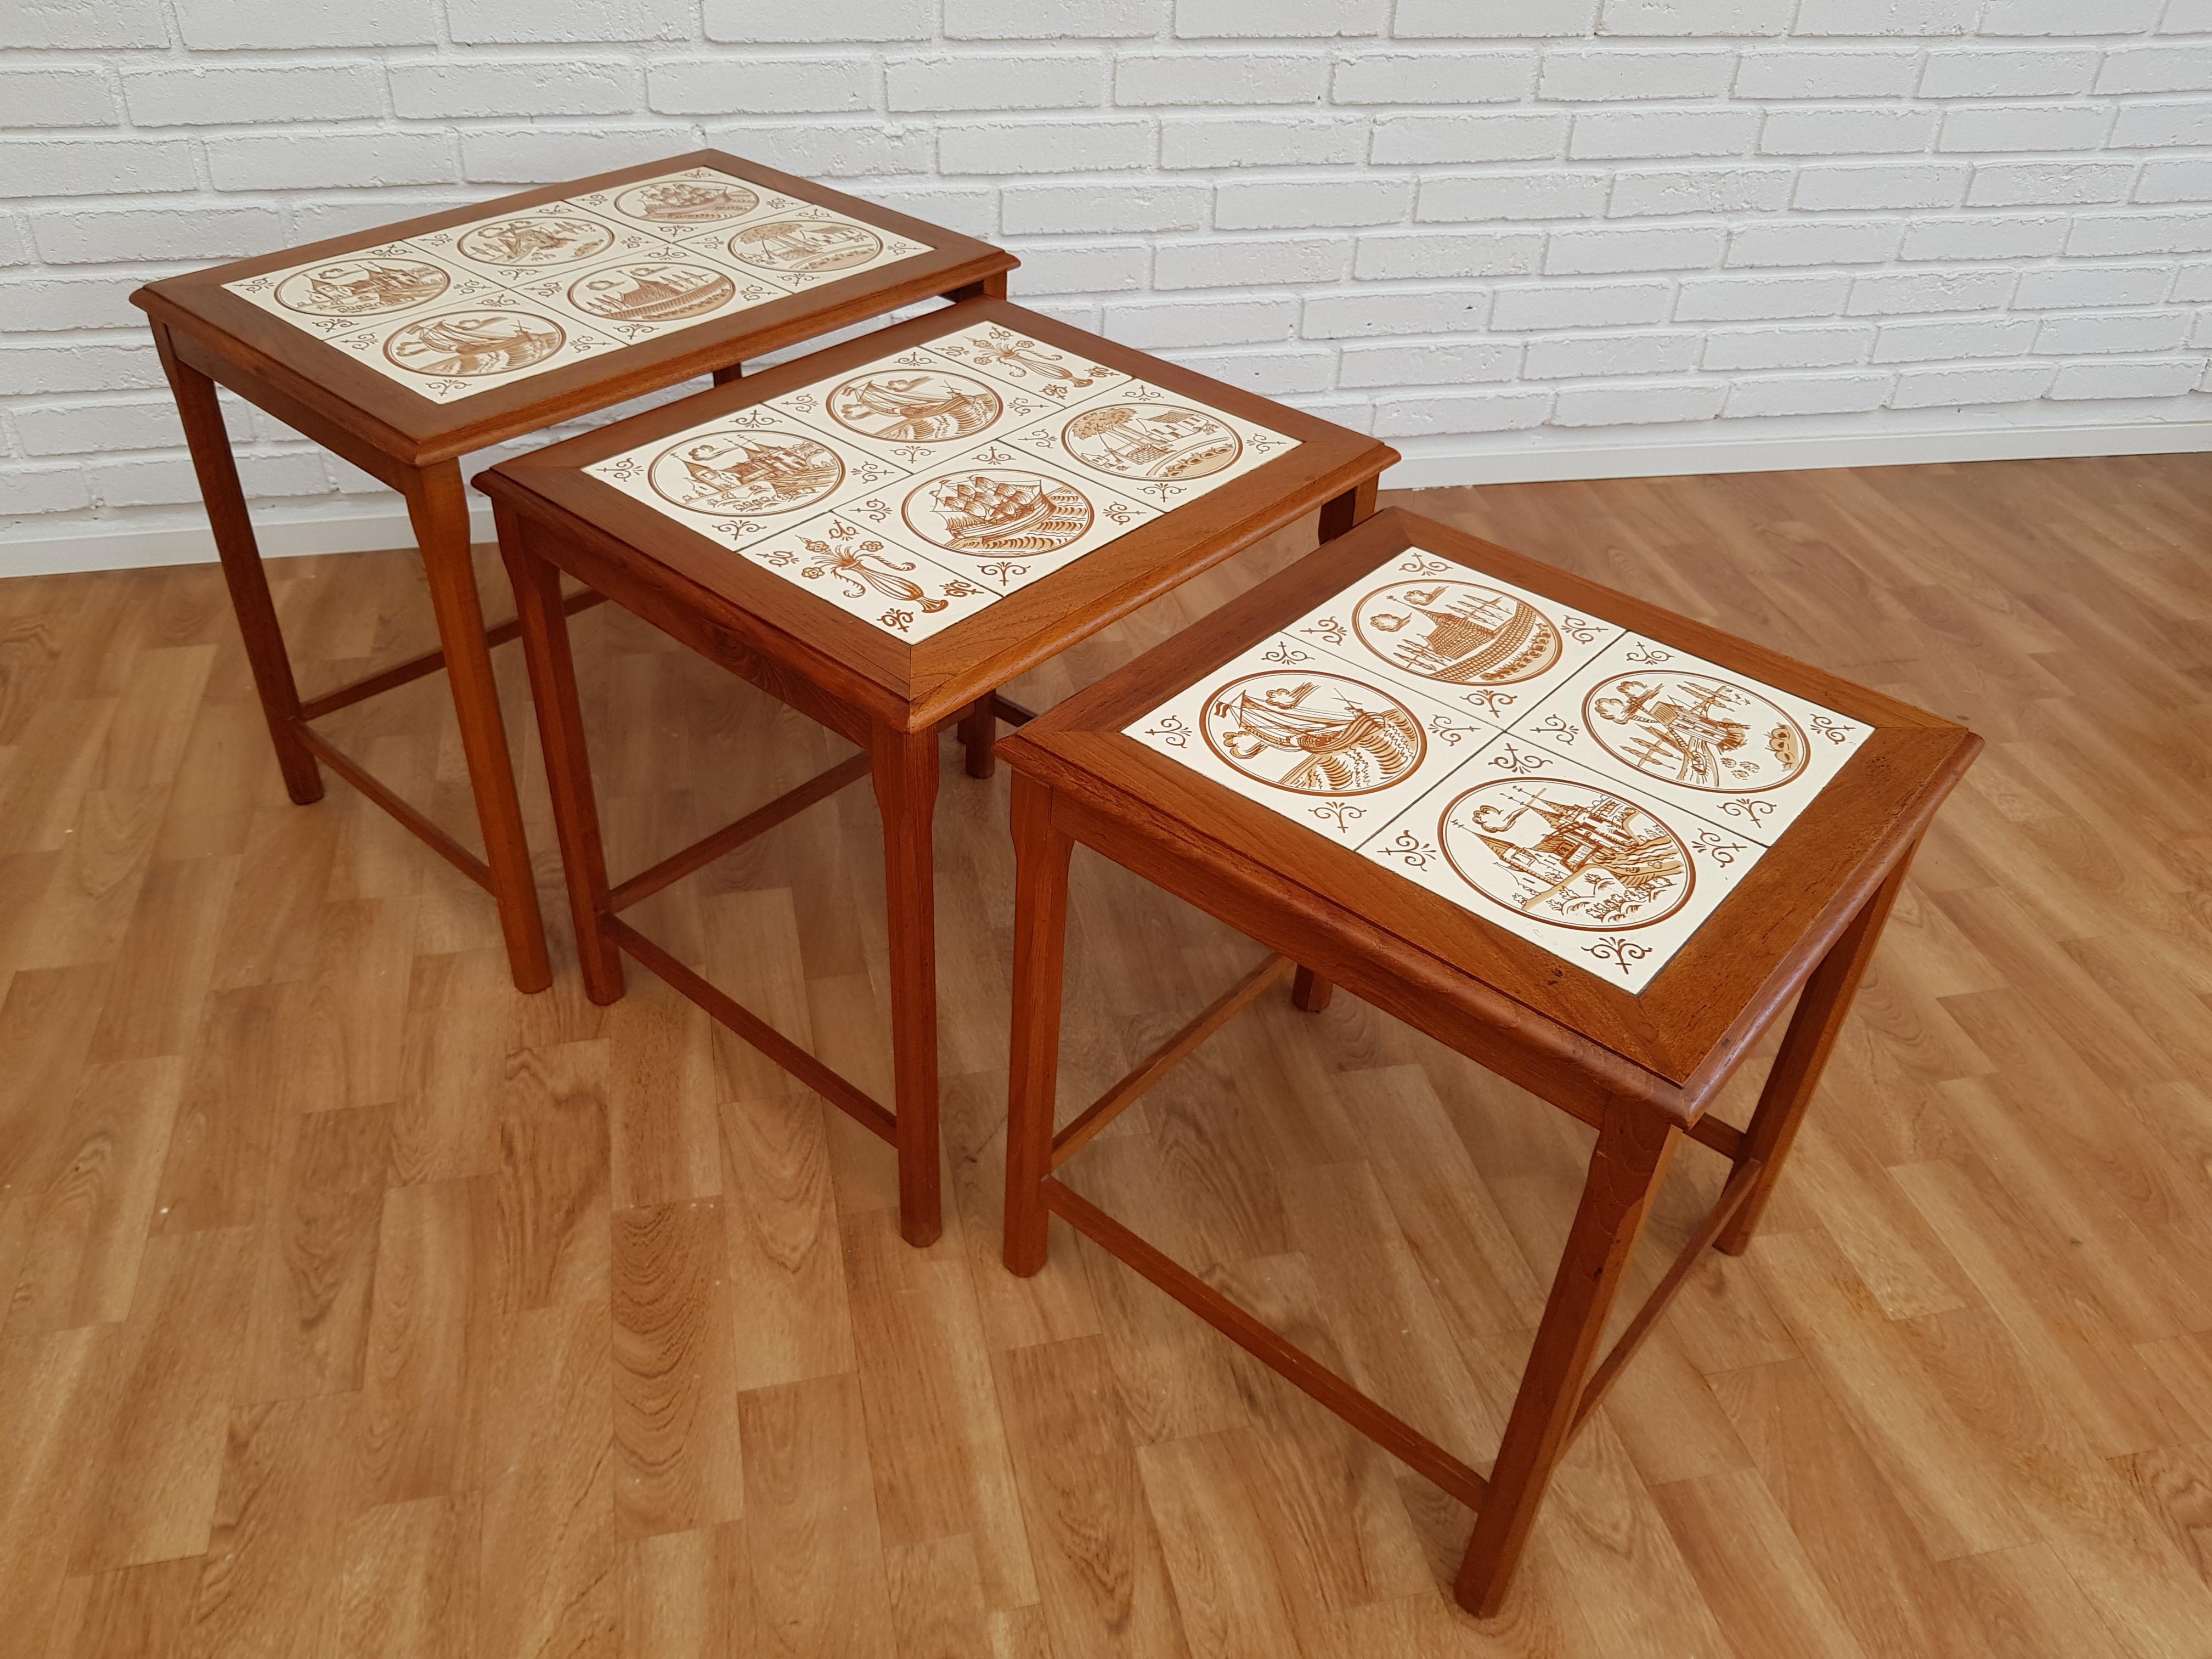 Nesting Table, Danish Design, Hand Painted Ceramic Tiles, Teak Wood, 1960s For Sale 1